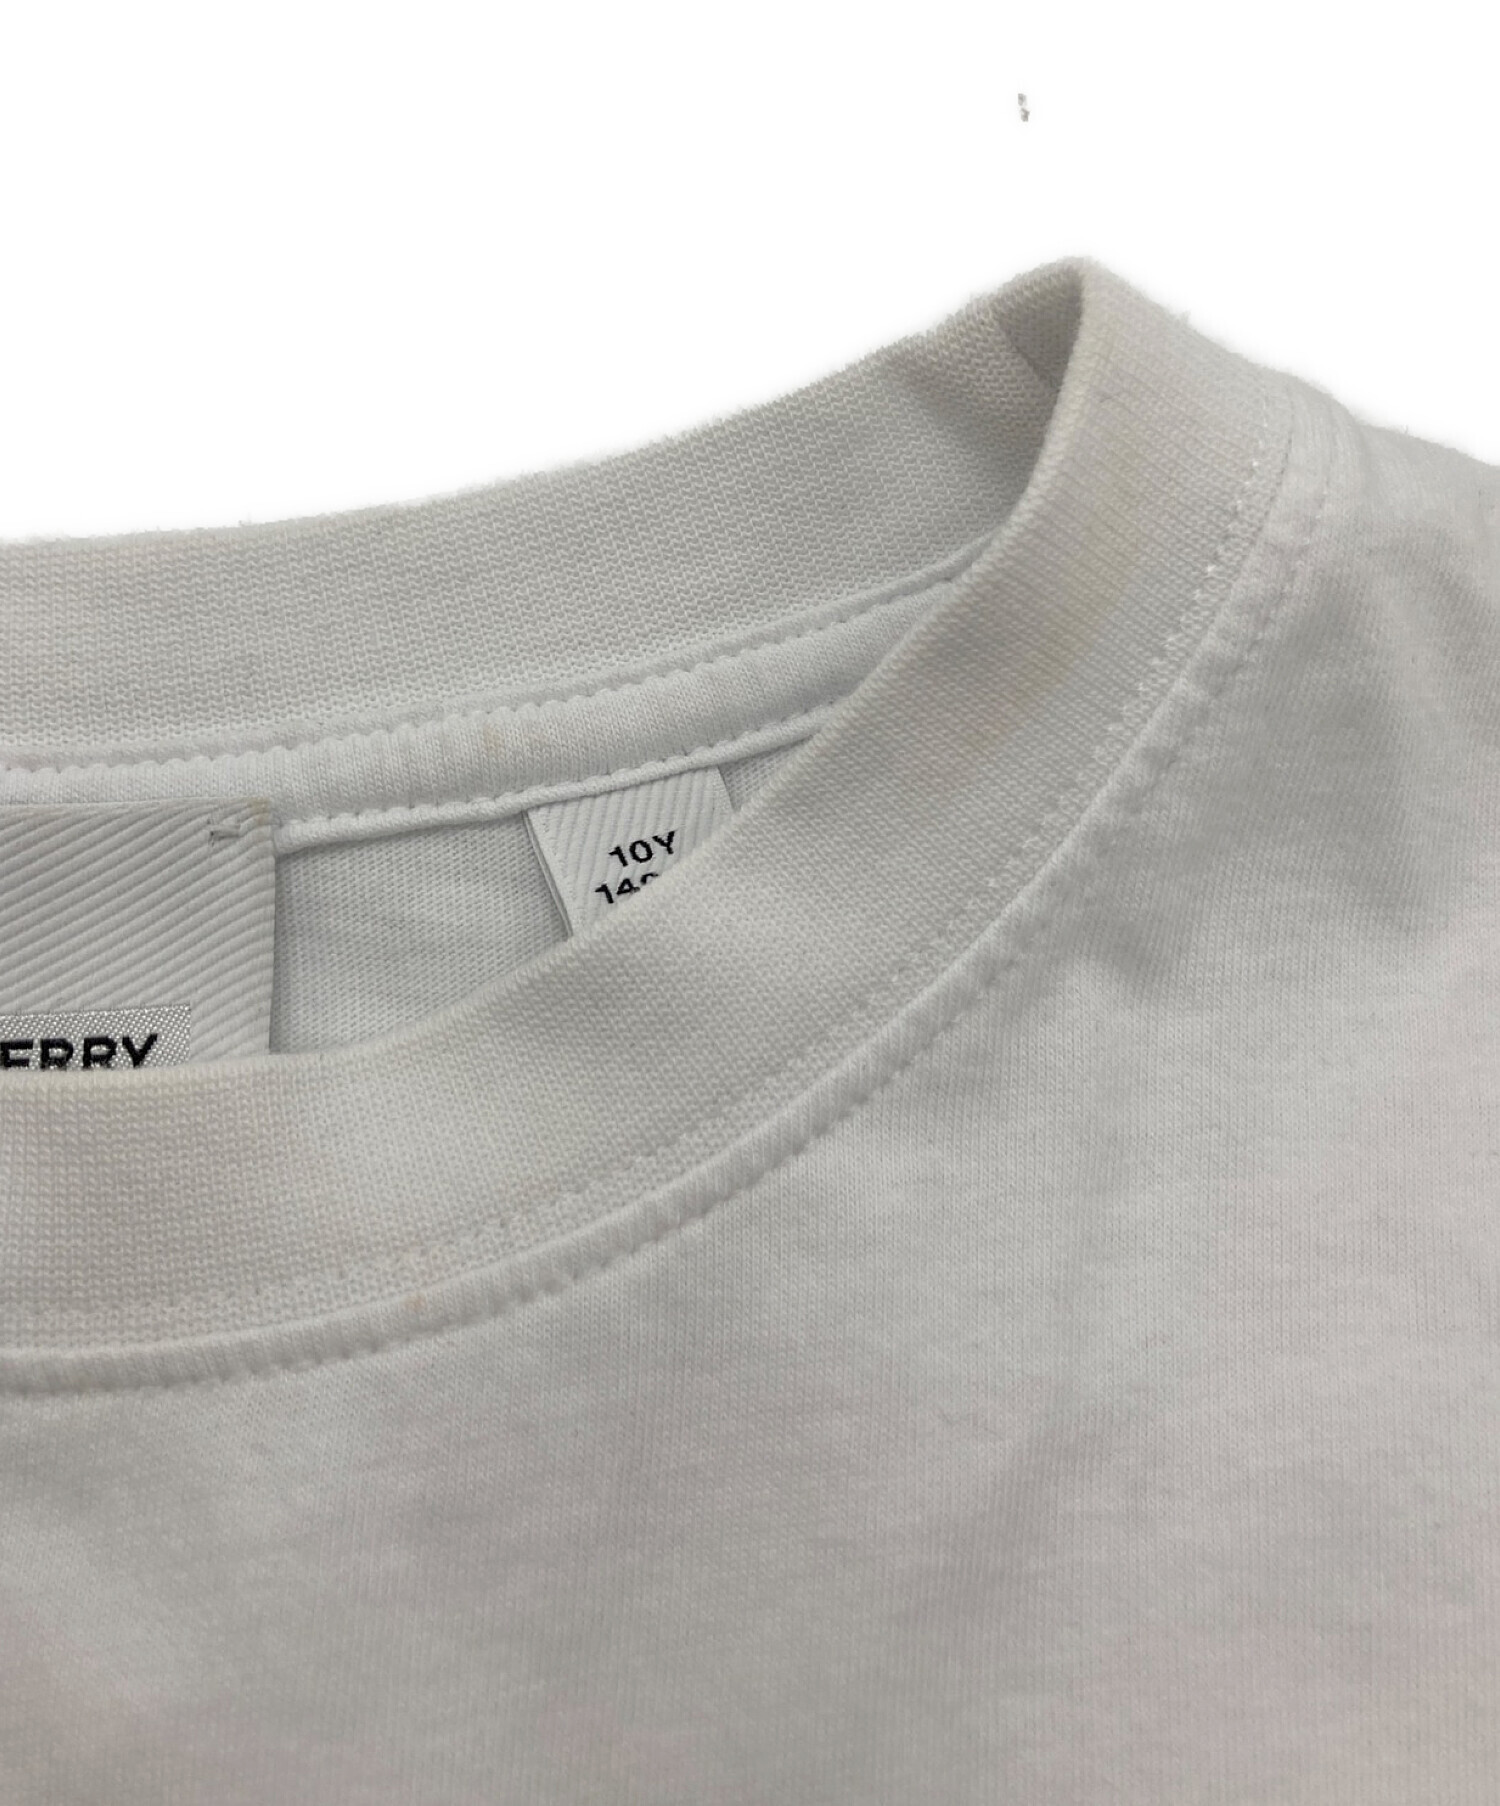 BURBERRY (バーバリー) Tシャツ サイズ:10Y